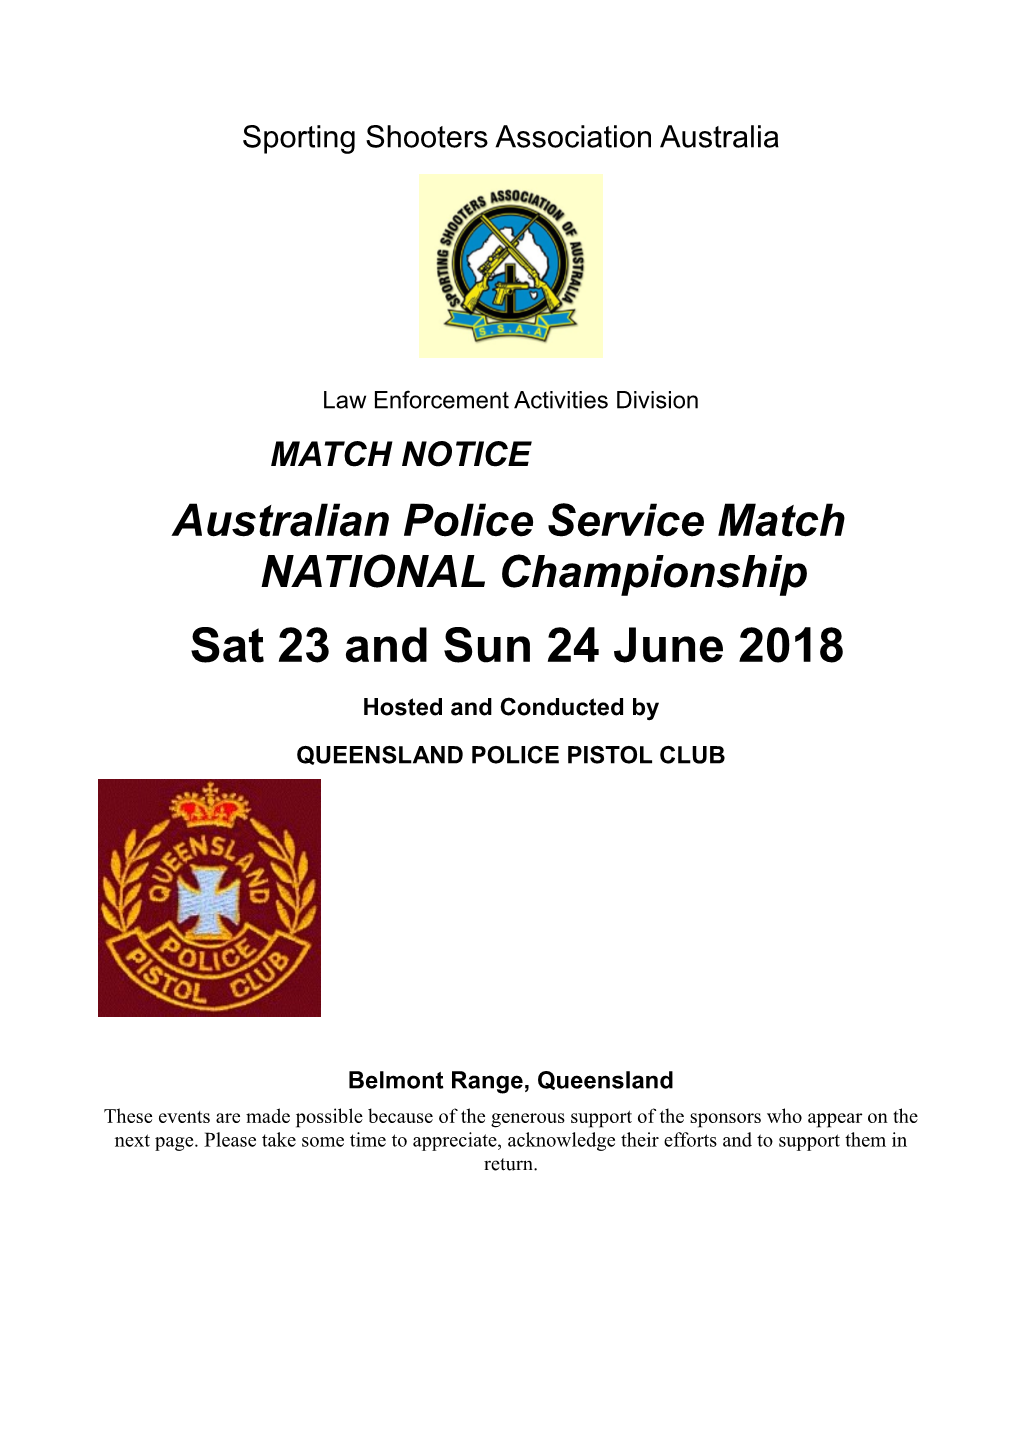 Australian Police Service Match NATIONAL Championship